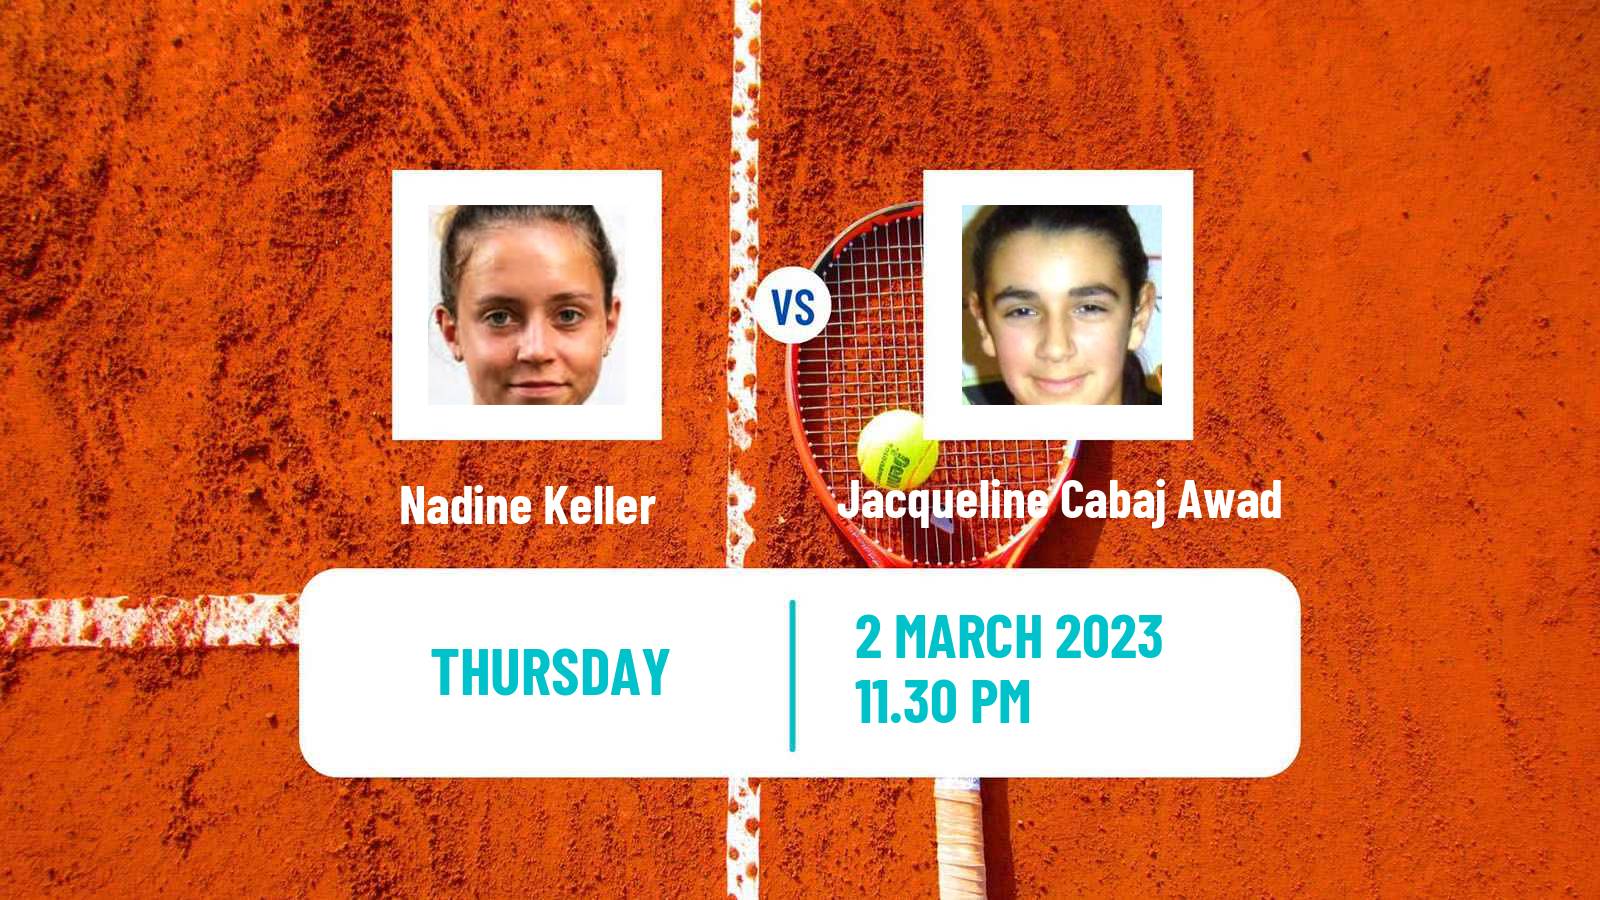 Tennis ITF Tournaments Nadine Keller - Jacqueline Cabaj Awad